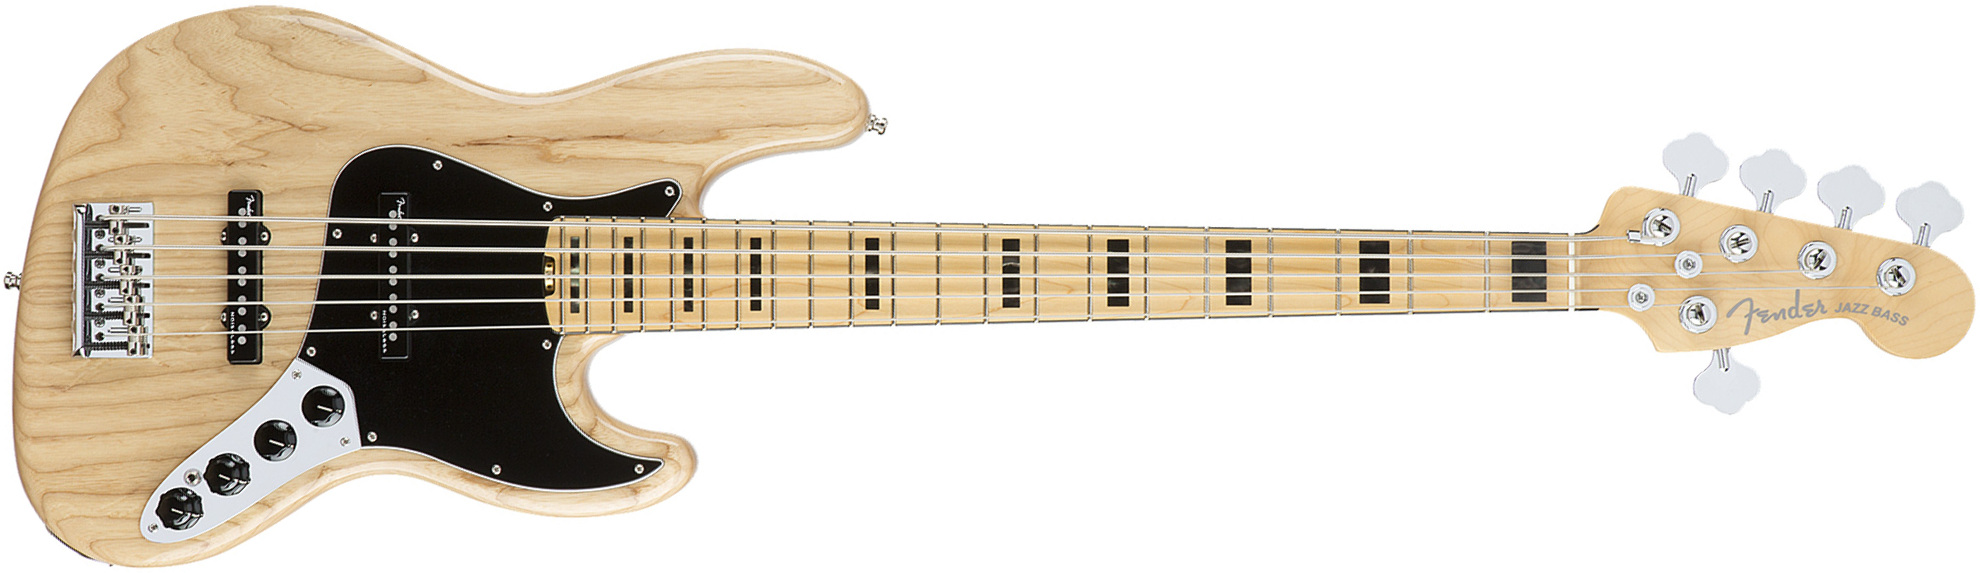 Fender Jazz Bass American Elite V Ash 5 Cordes 2016 (usa, Mn) - Natural - Solid body elektrische bas - Main picture